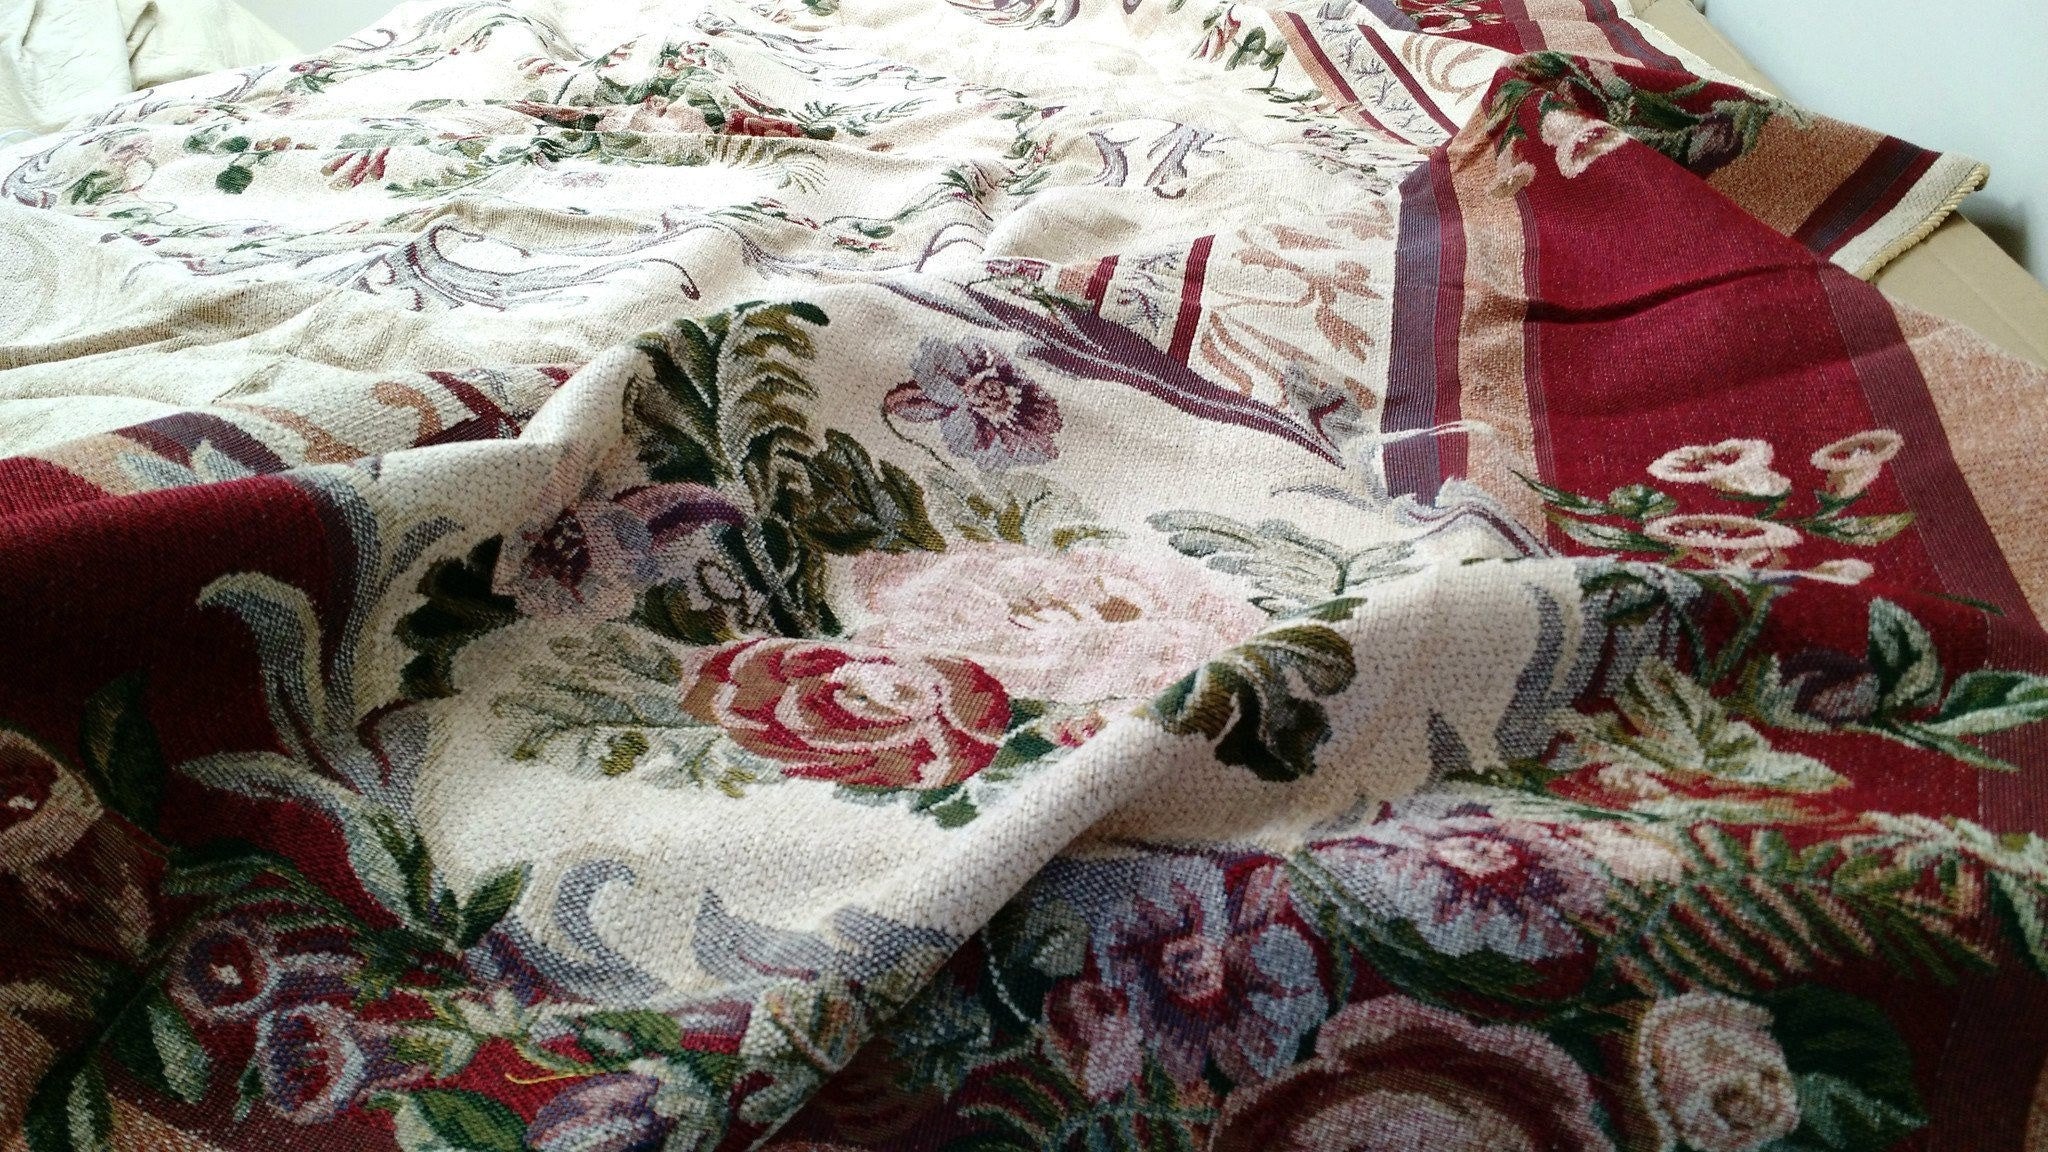 Tache Chenille Red Yuletide Blossoms Tapestry Bedspread Set Twin (DSC004) - Tache Home Fashion